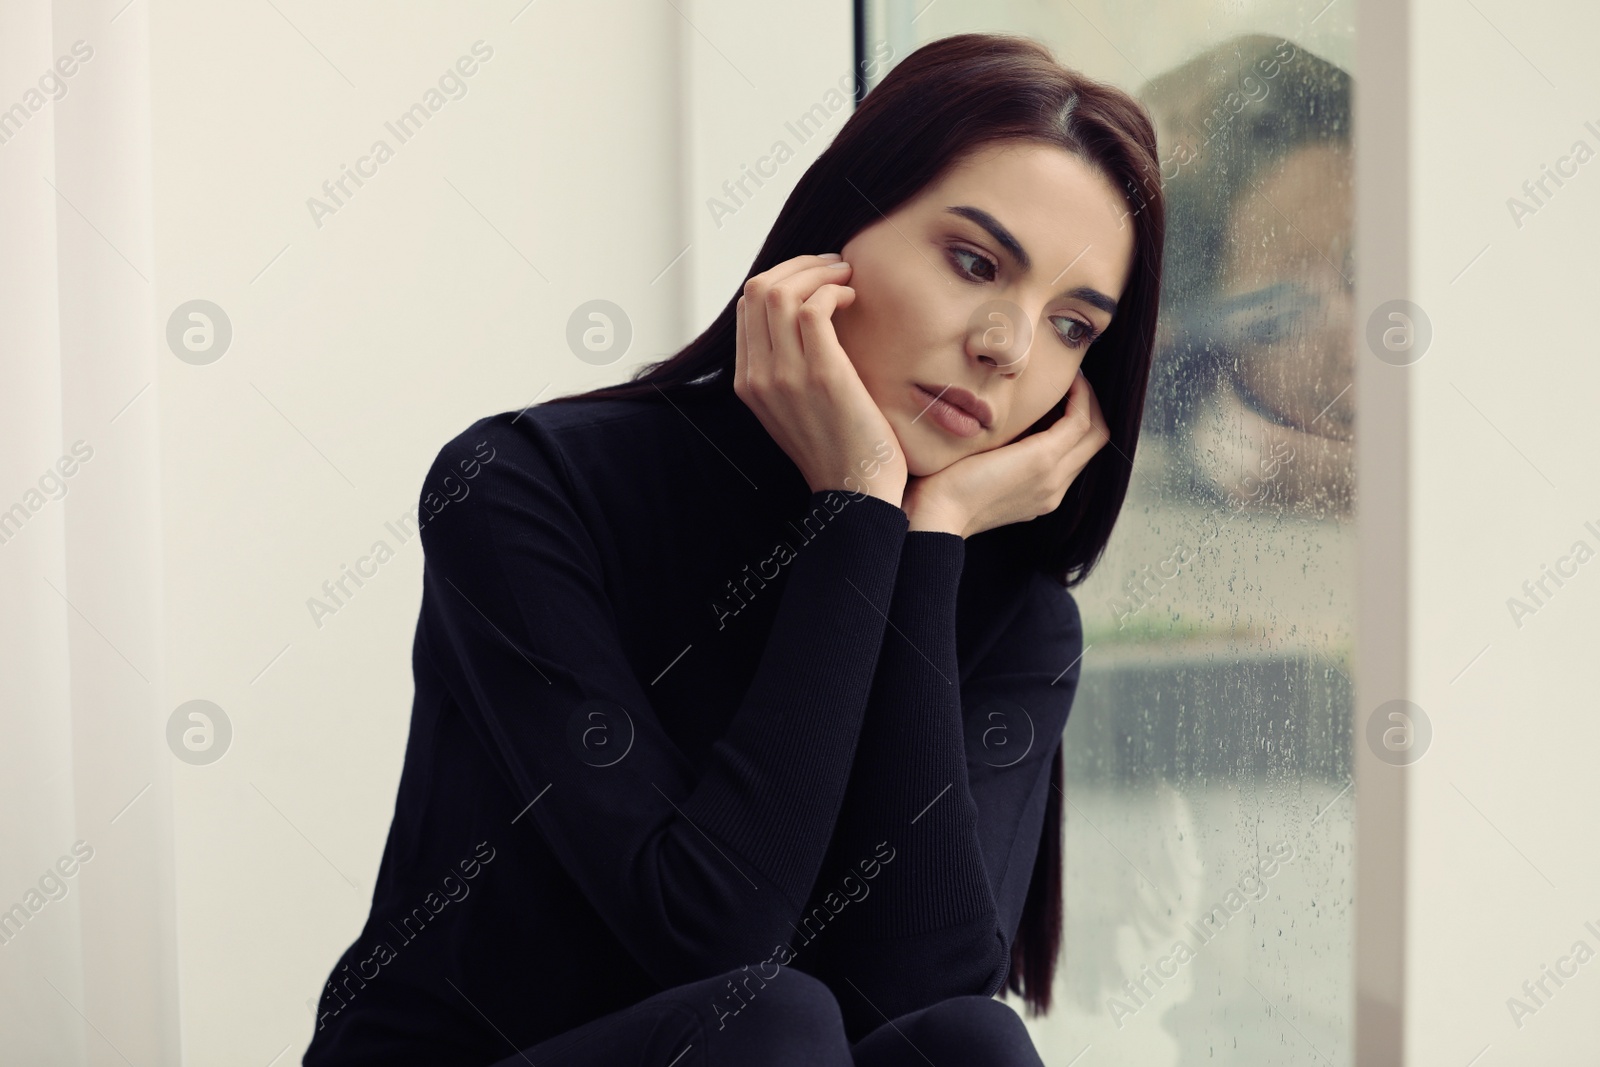 Photo of Depressed woman near window on rainy day